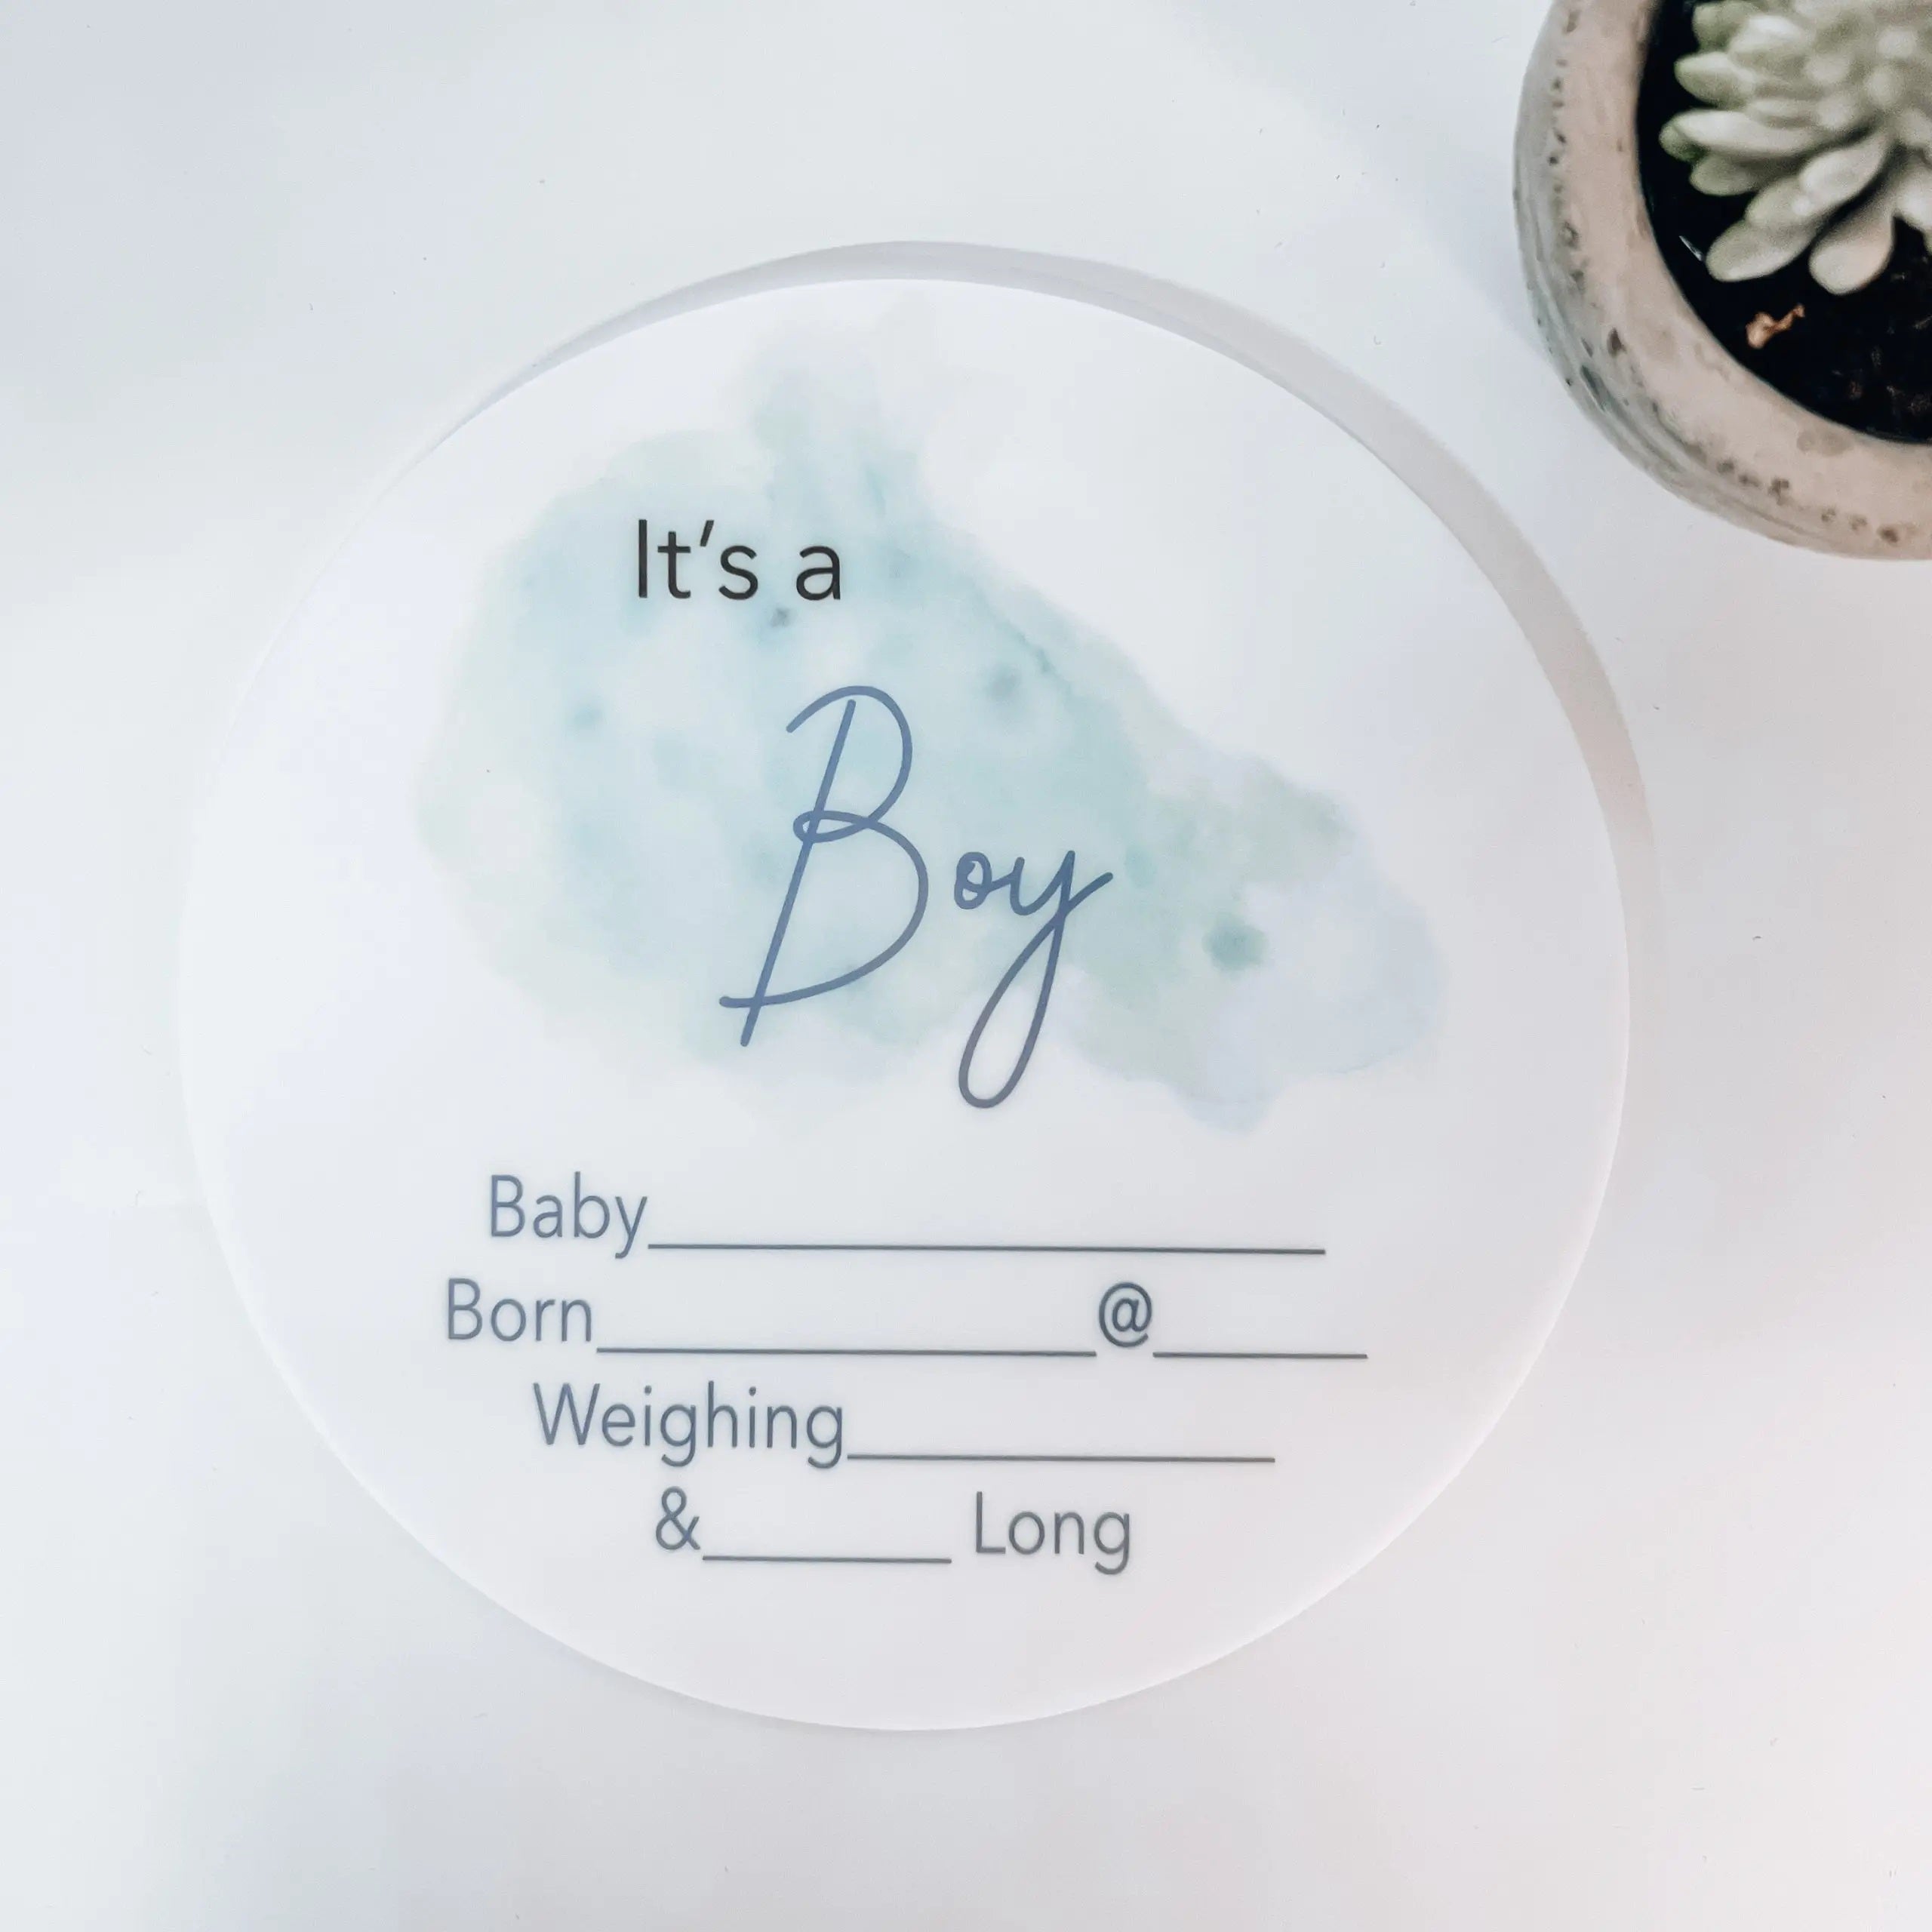 Birth Announcement Plaques – It’s a Boy